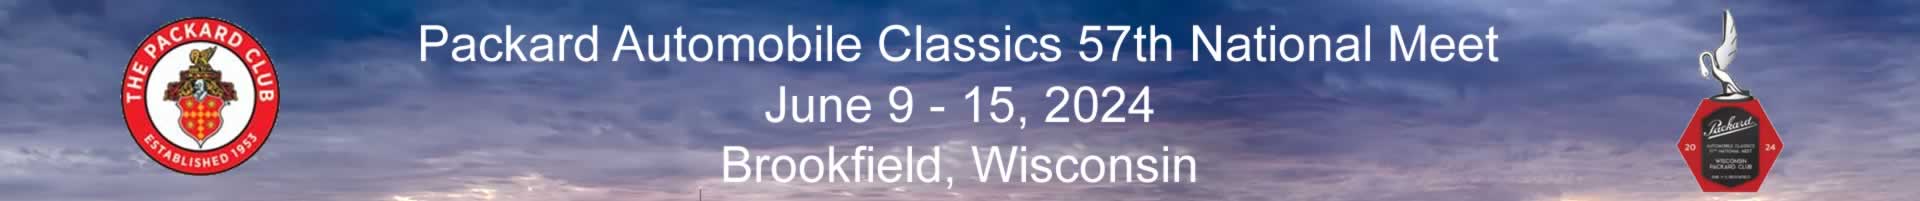 Packard Automobile Classics National Meet